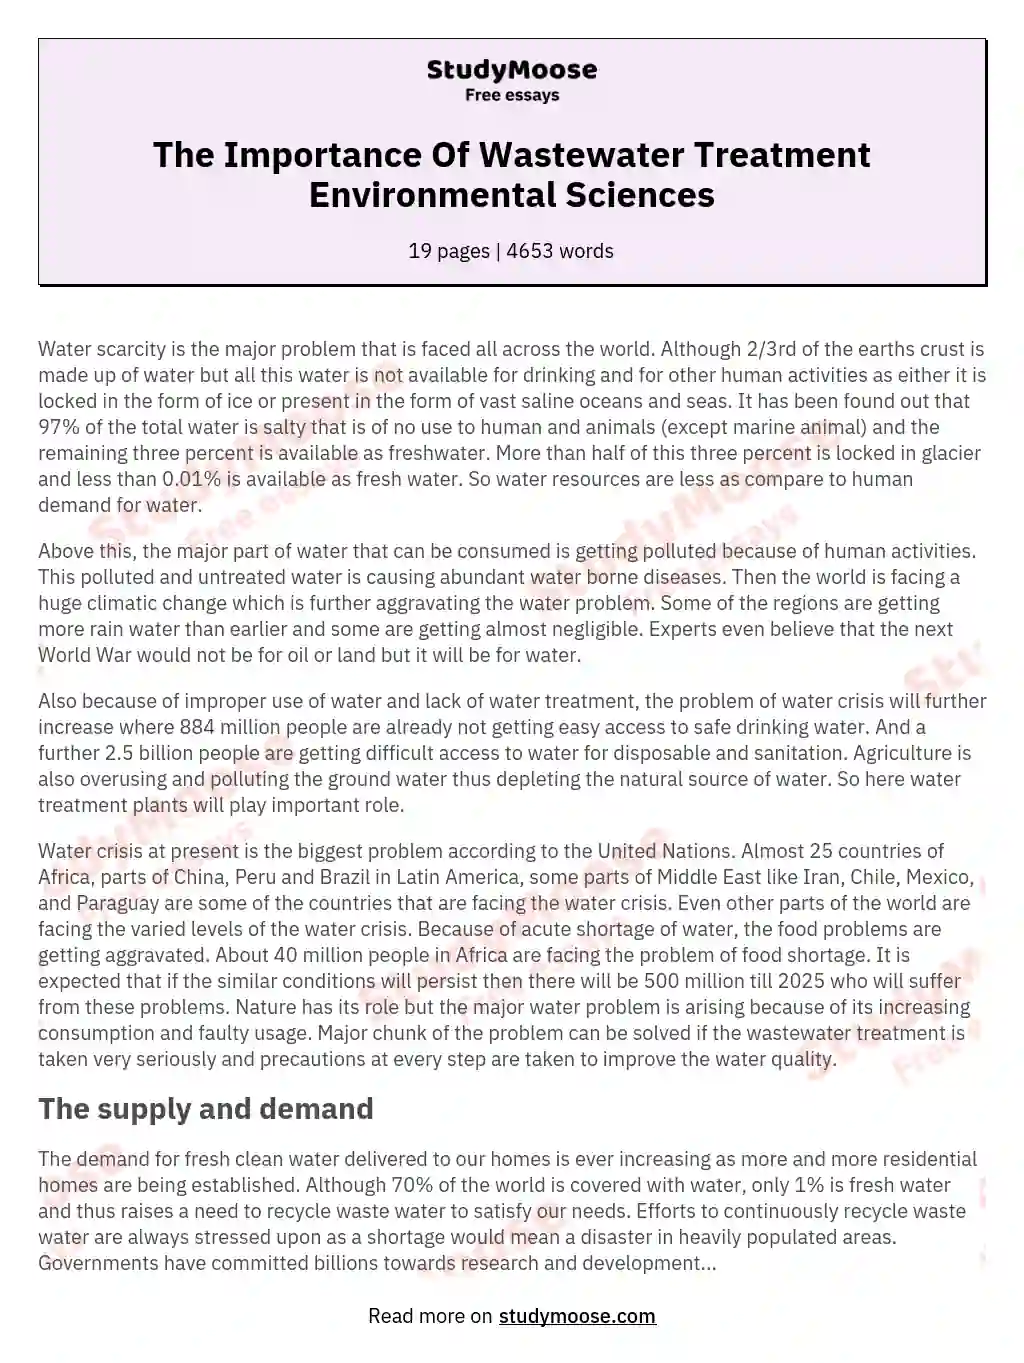 essay in waste water